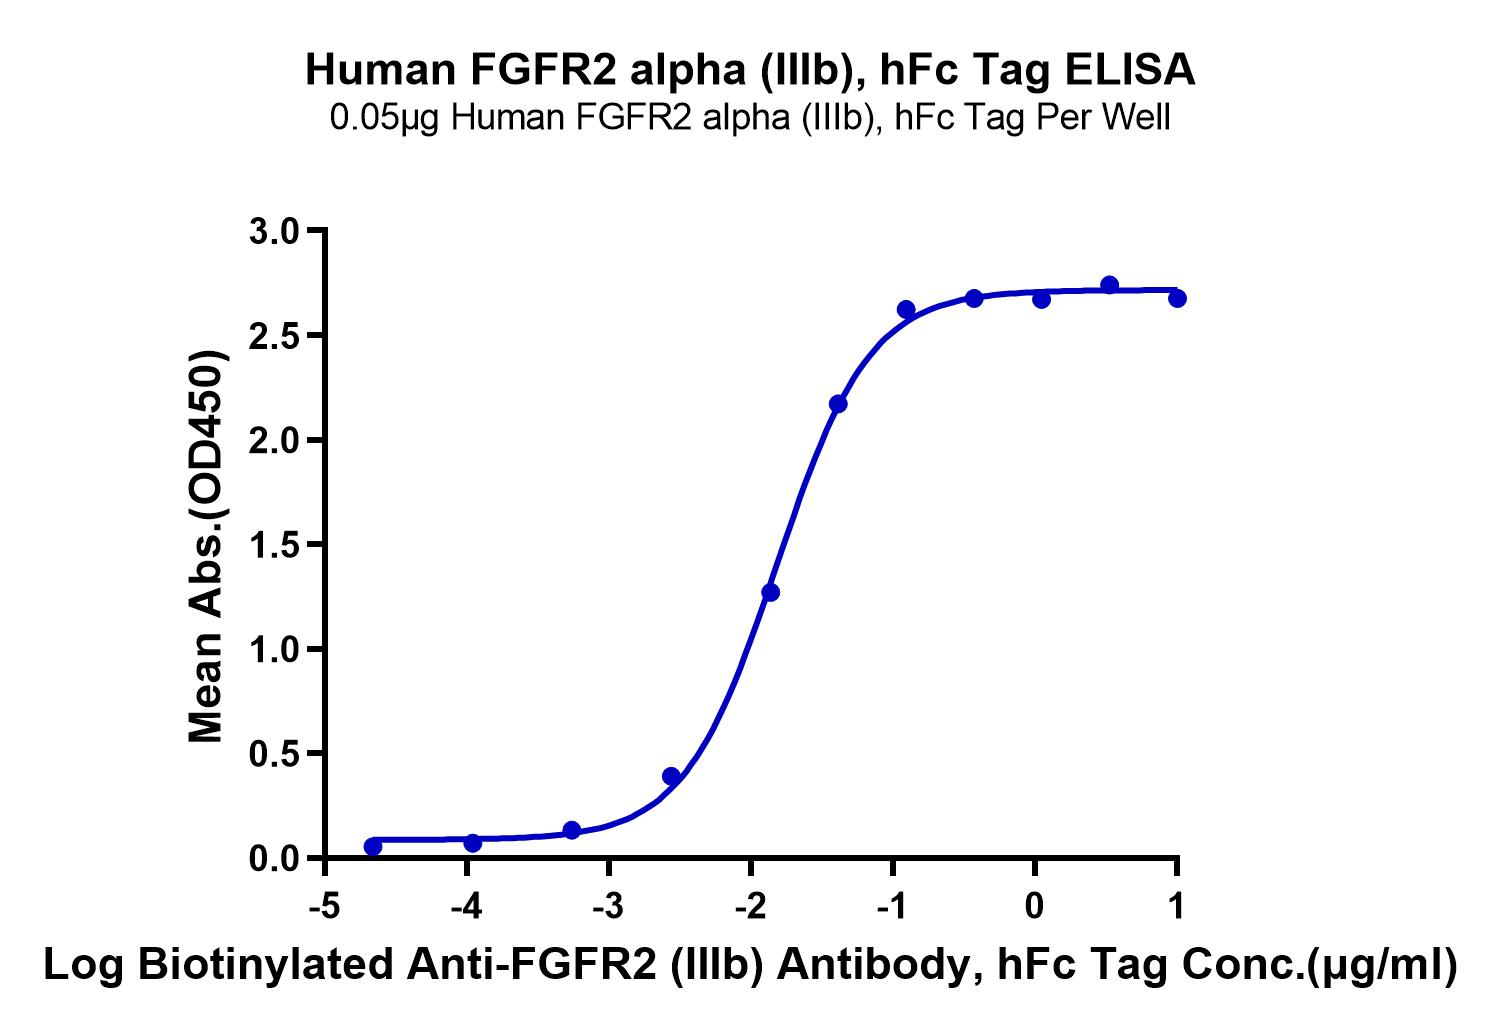 Human FGFR2 alpha (IIIb) Protein (LTP11063)